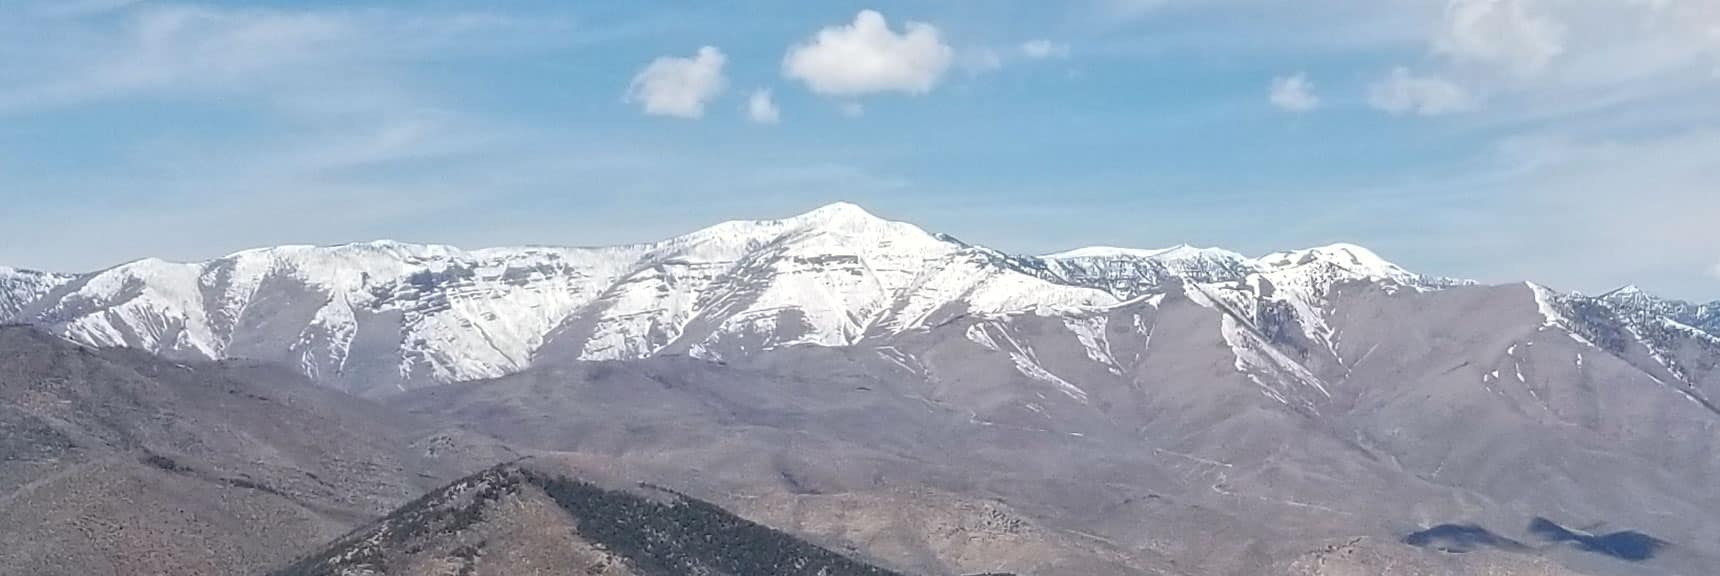 Griffith Peak in Mt Charleston Wilderness Viewed from 7800ft on Keystone Thrust Near La Madre Mt, Nevada